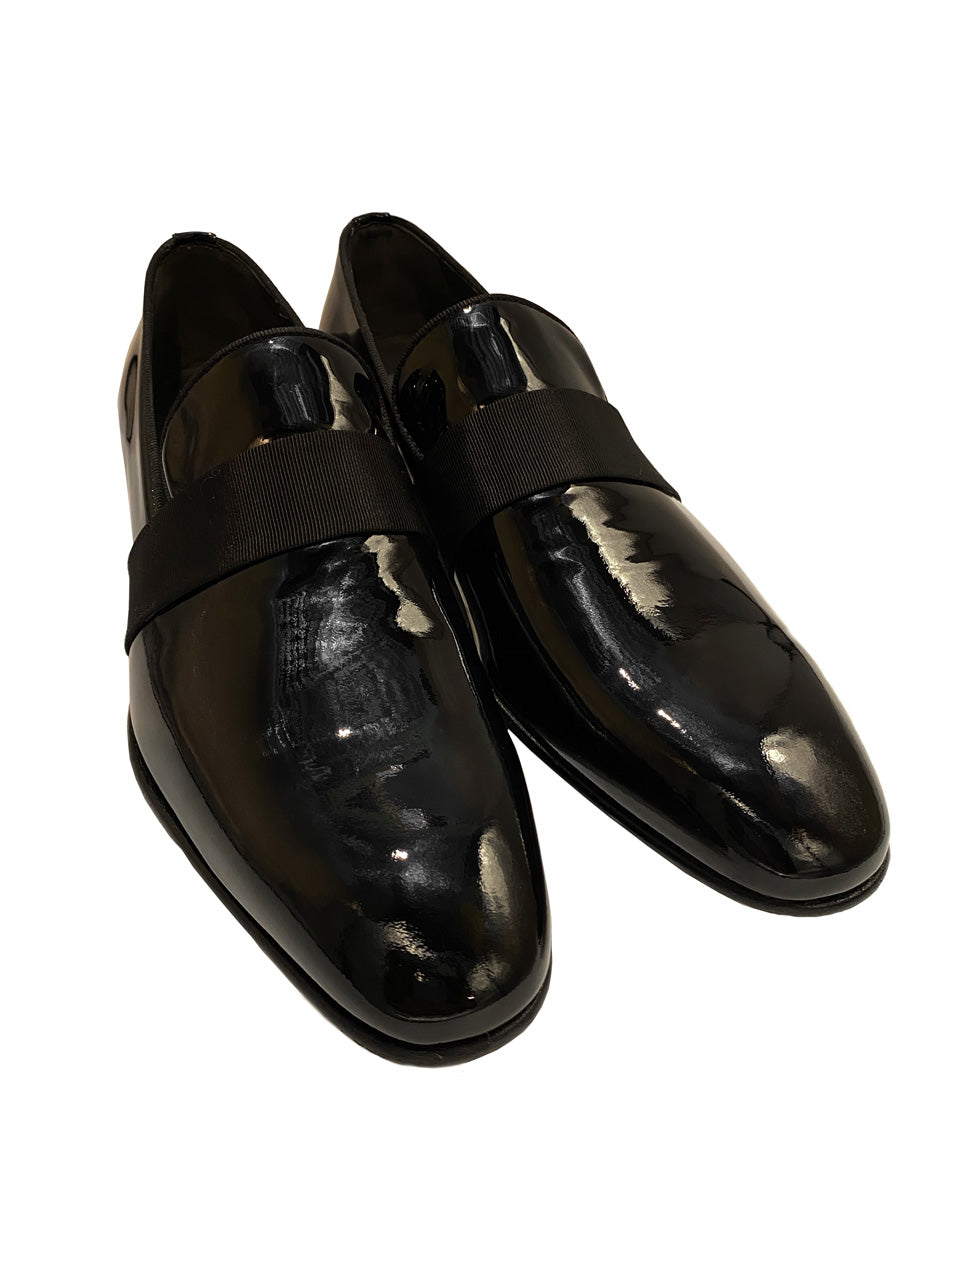 Legwork Brogue Informal Oxford Wingtip Black Patent Italian Leather Sh